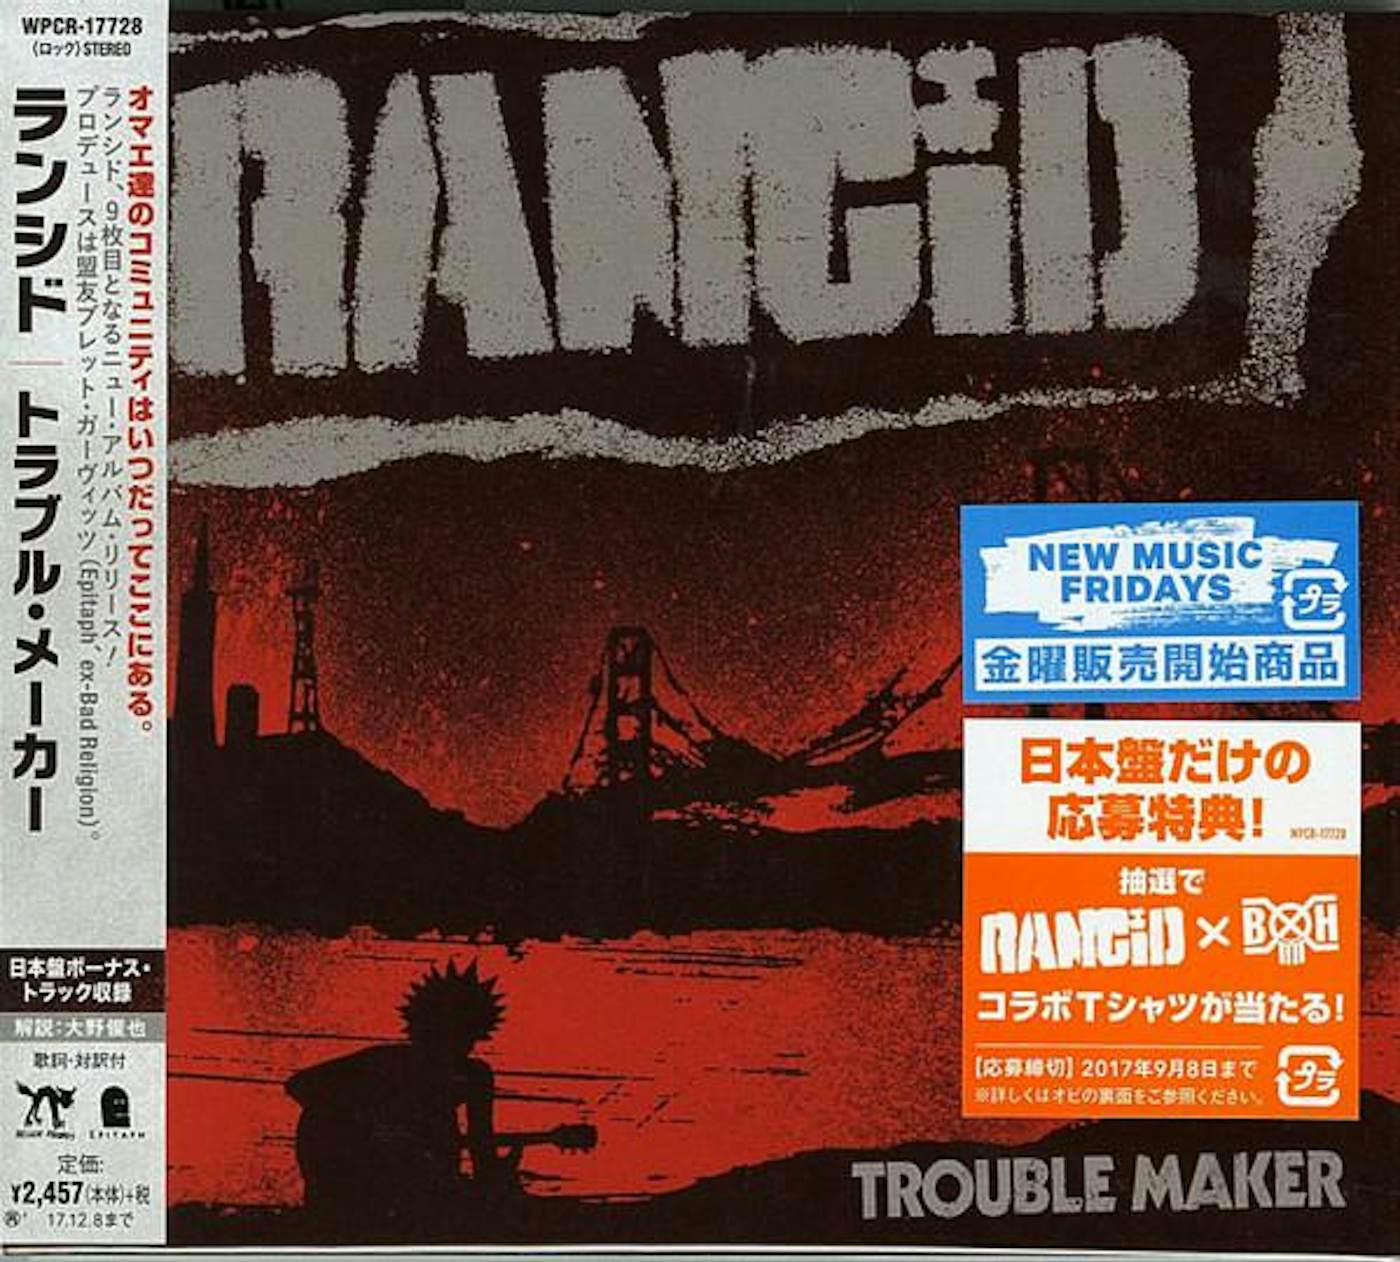 Rancid TROUBLE MAKER (3 BONUS TRACKS) CD